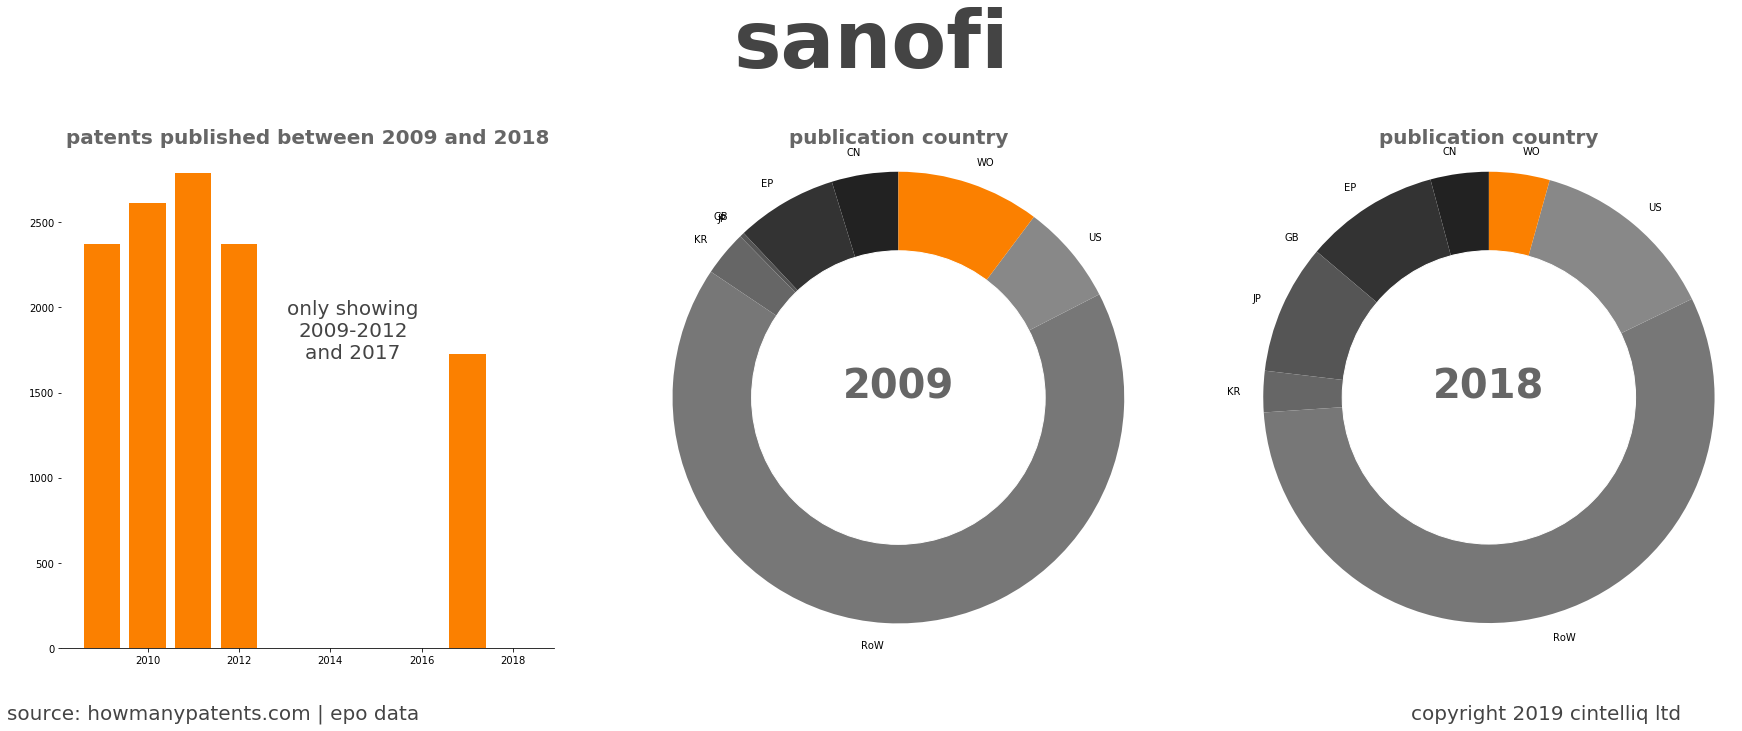 summary of patents for Sanofi